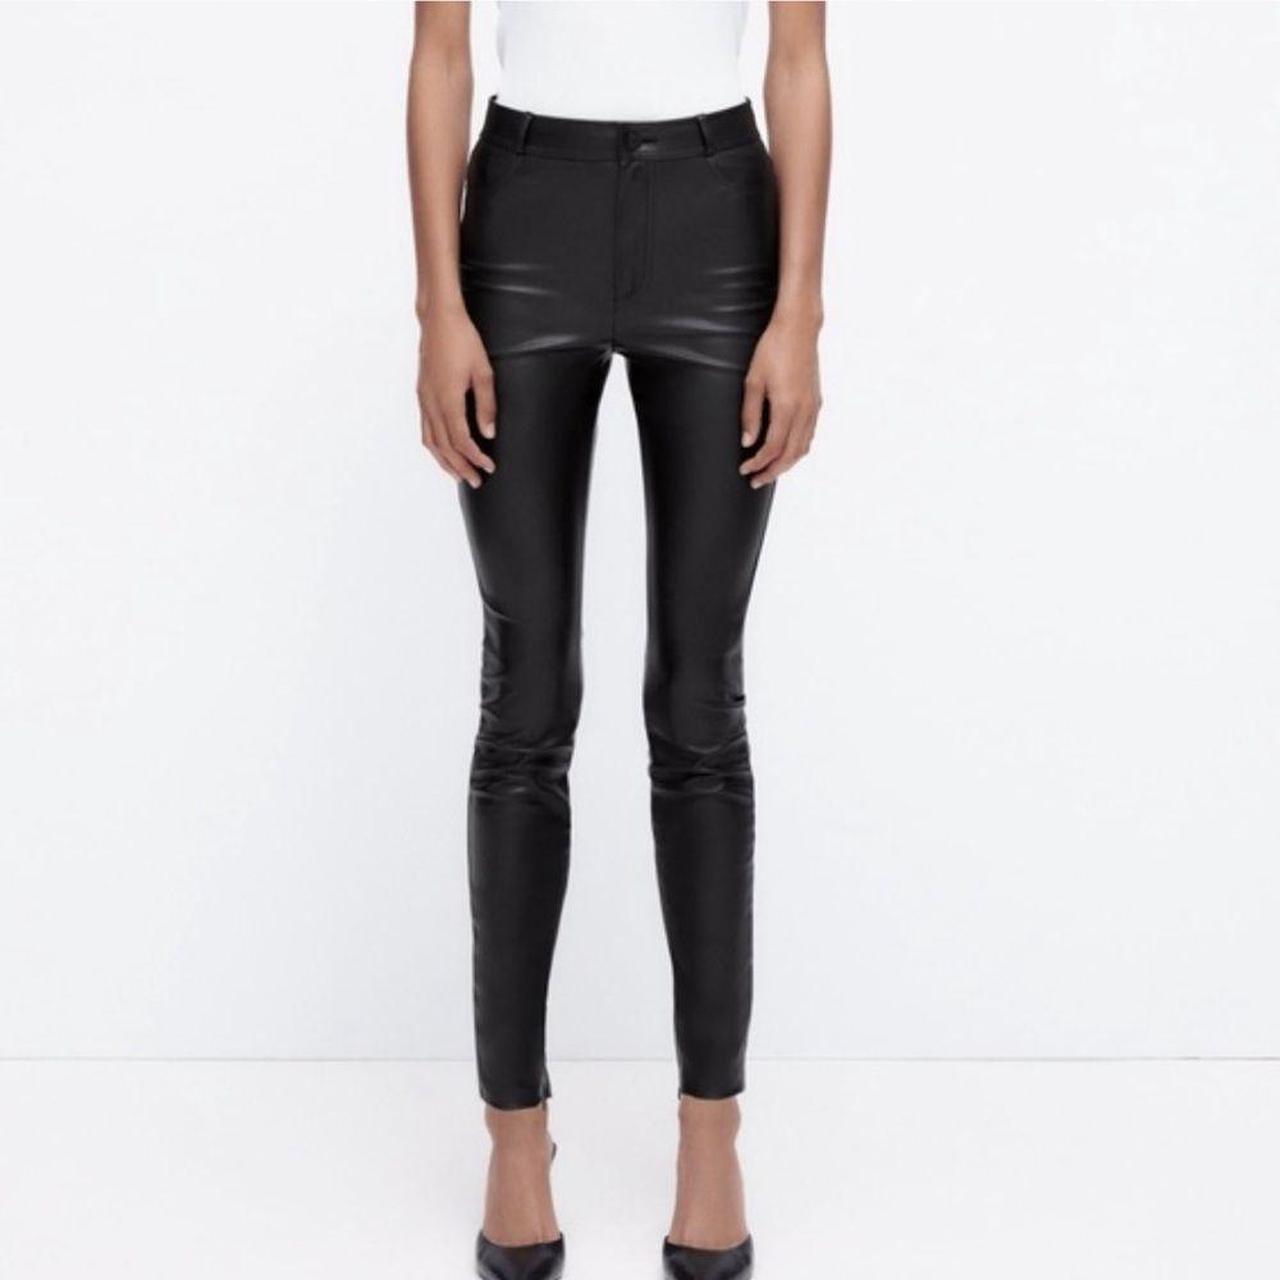 Zara | Pants & Jumpsuits | New Zara Black Faux Leather Ankle Zip High Waist  Leggings Pants Nwt | Poshmark